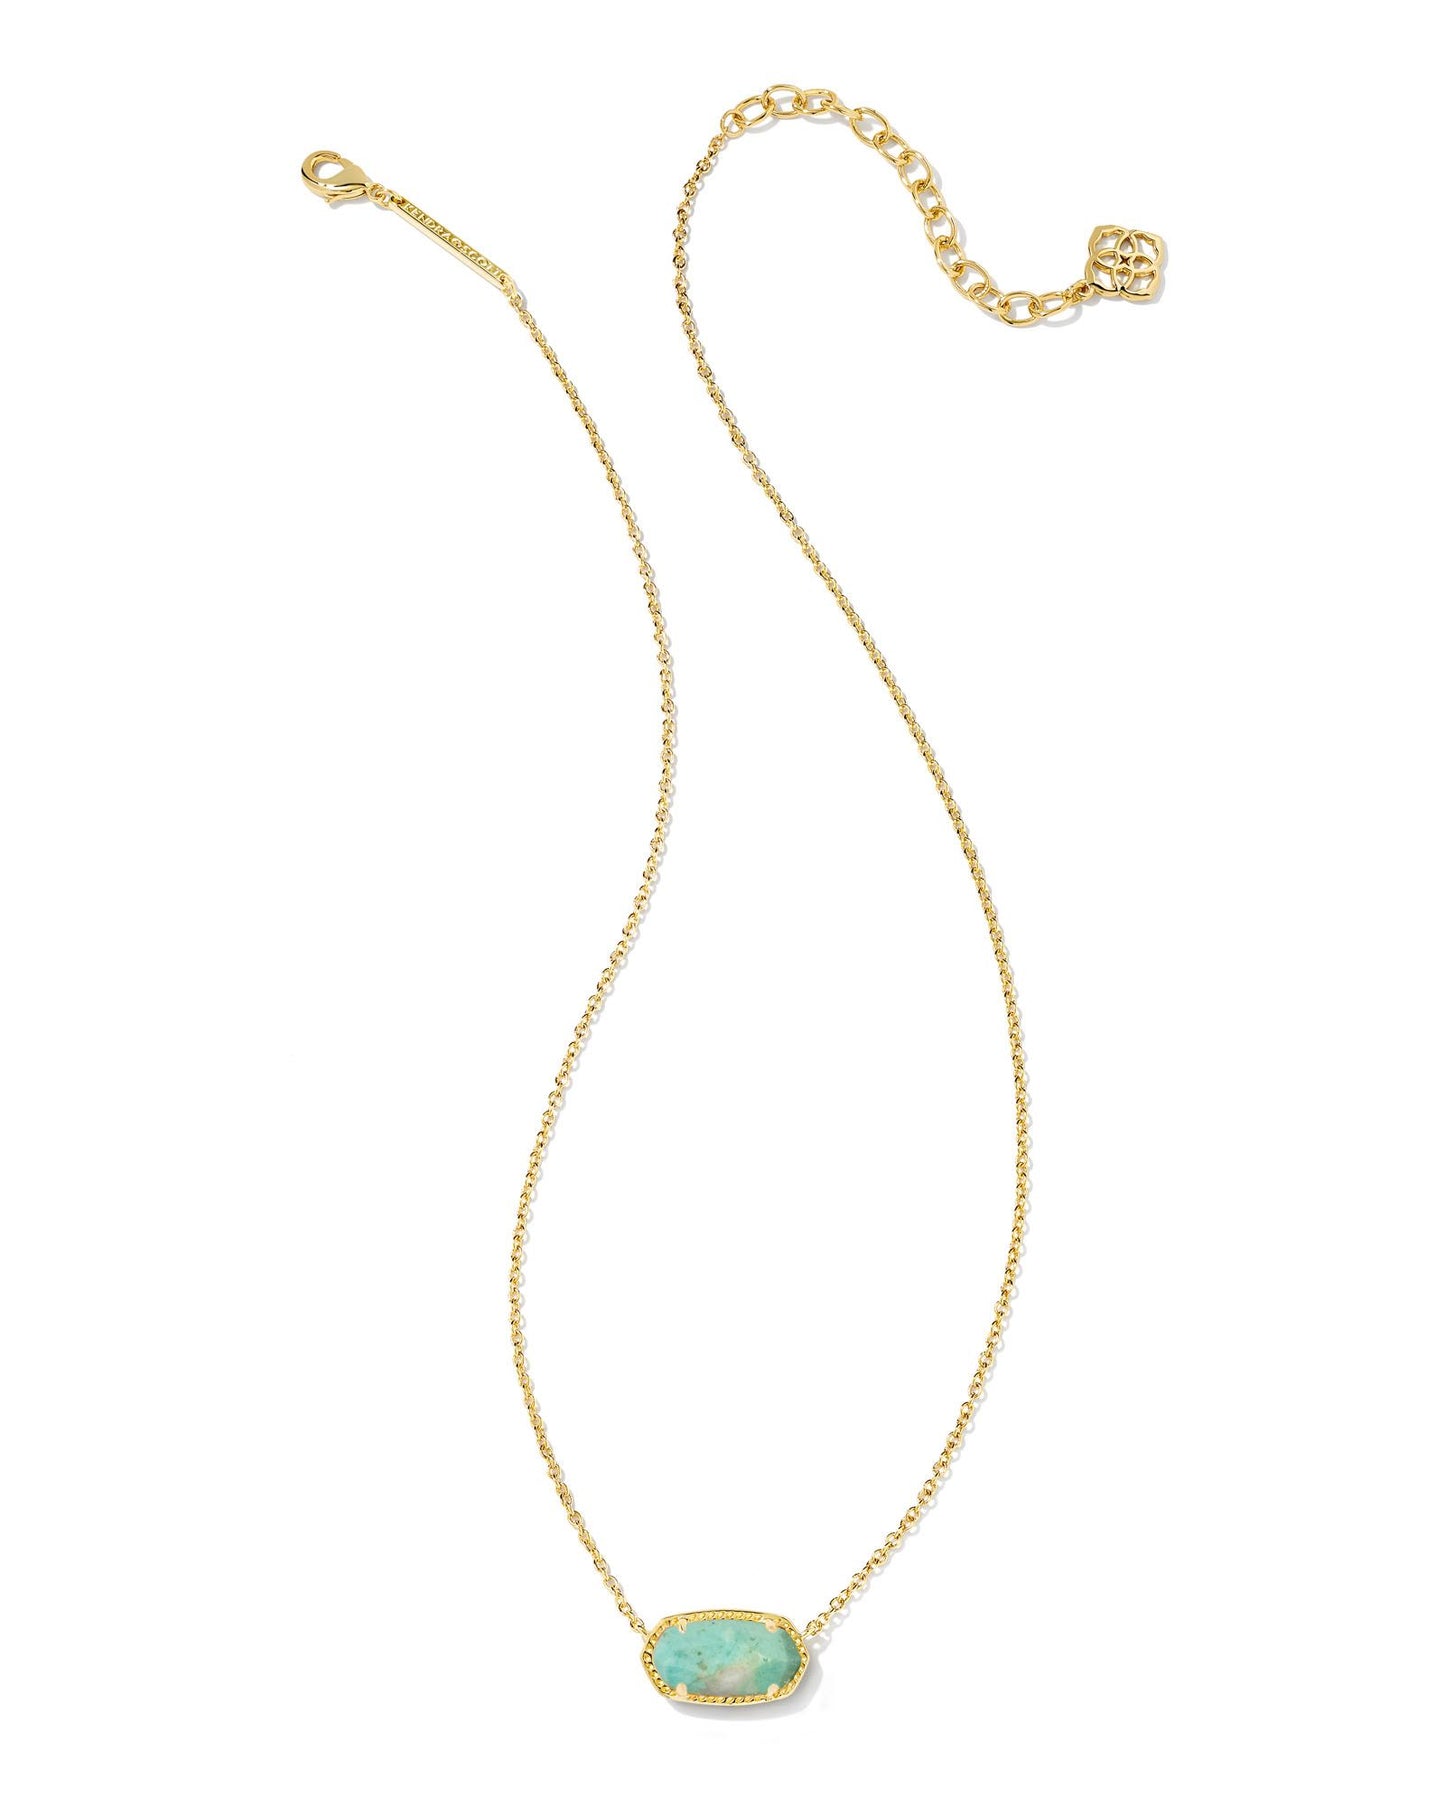 Elisa Gold Pendant Necklace in Sea Green Chrysocolla